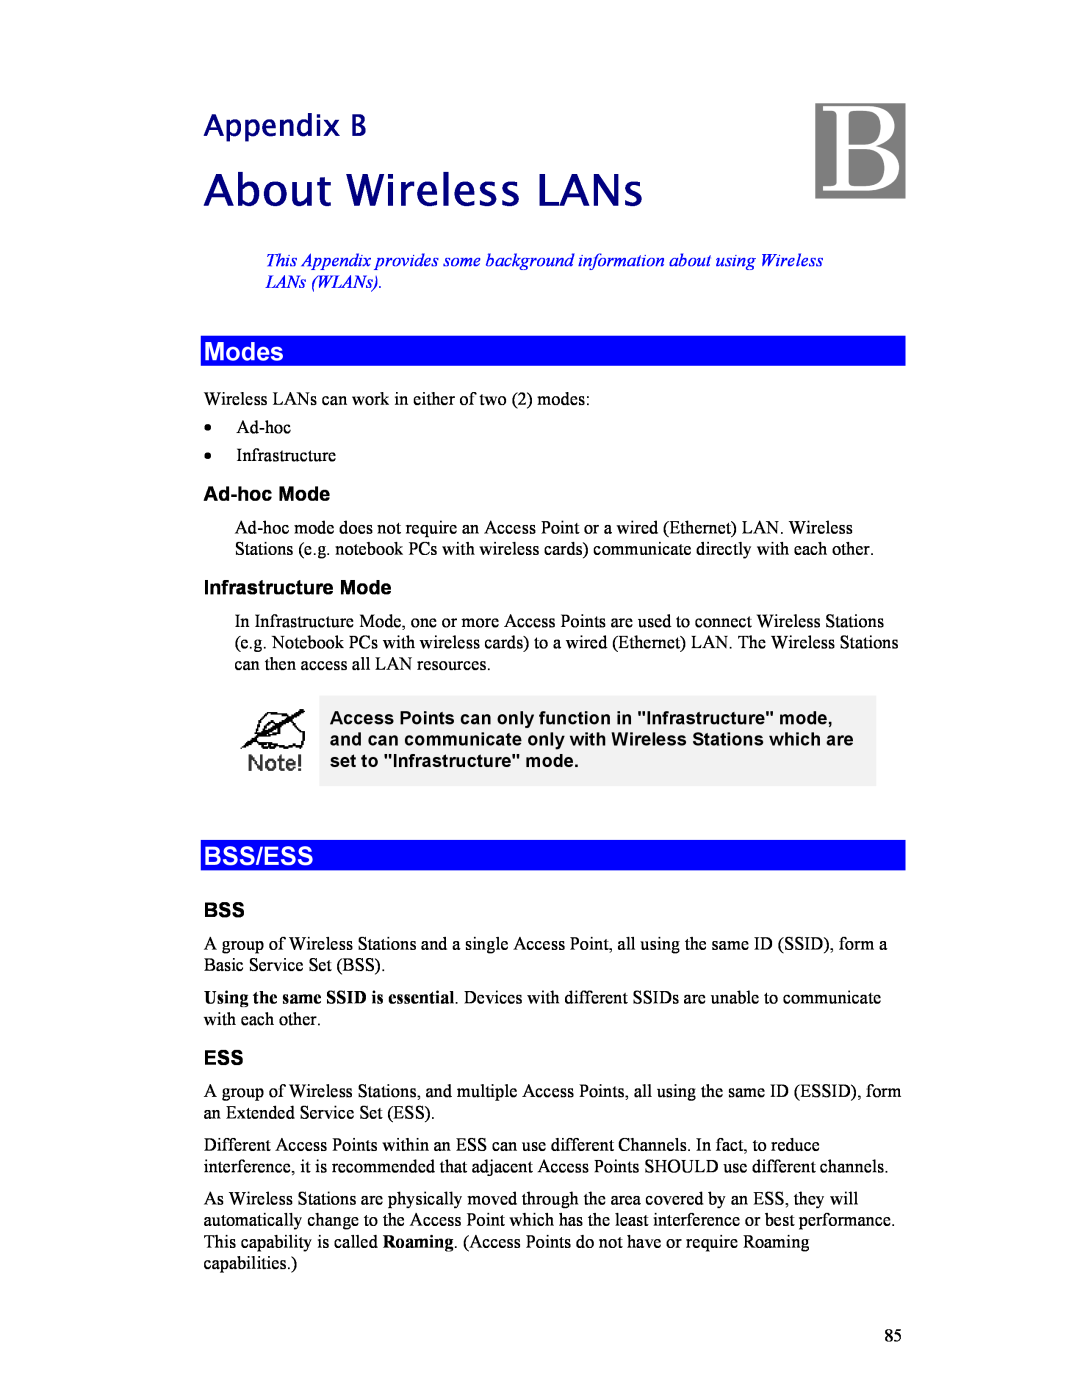 Hawking Technology HWR54G manual About Wireless LANs, Appendix B, Modes, Bss/Ess 